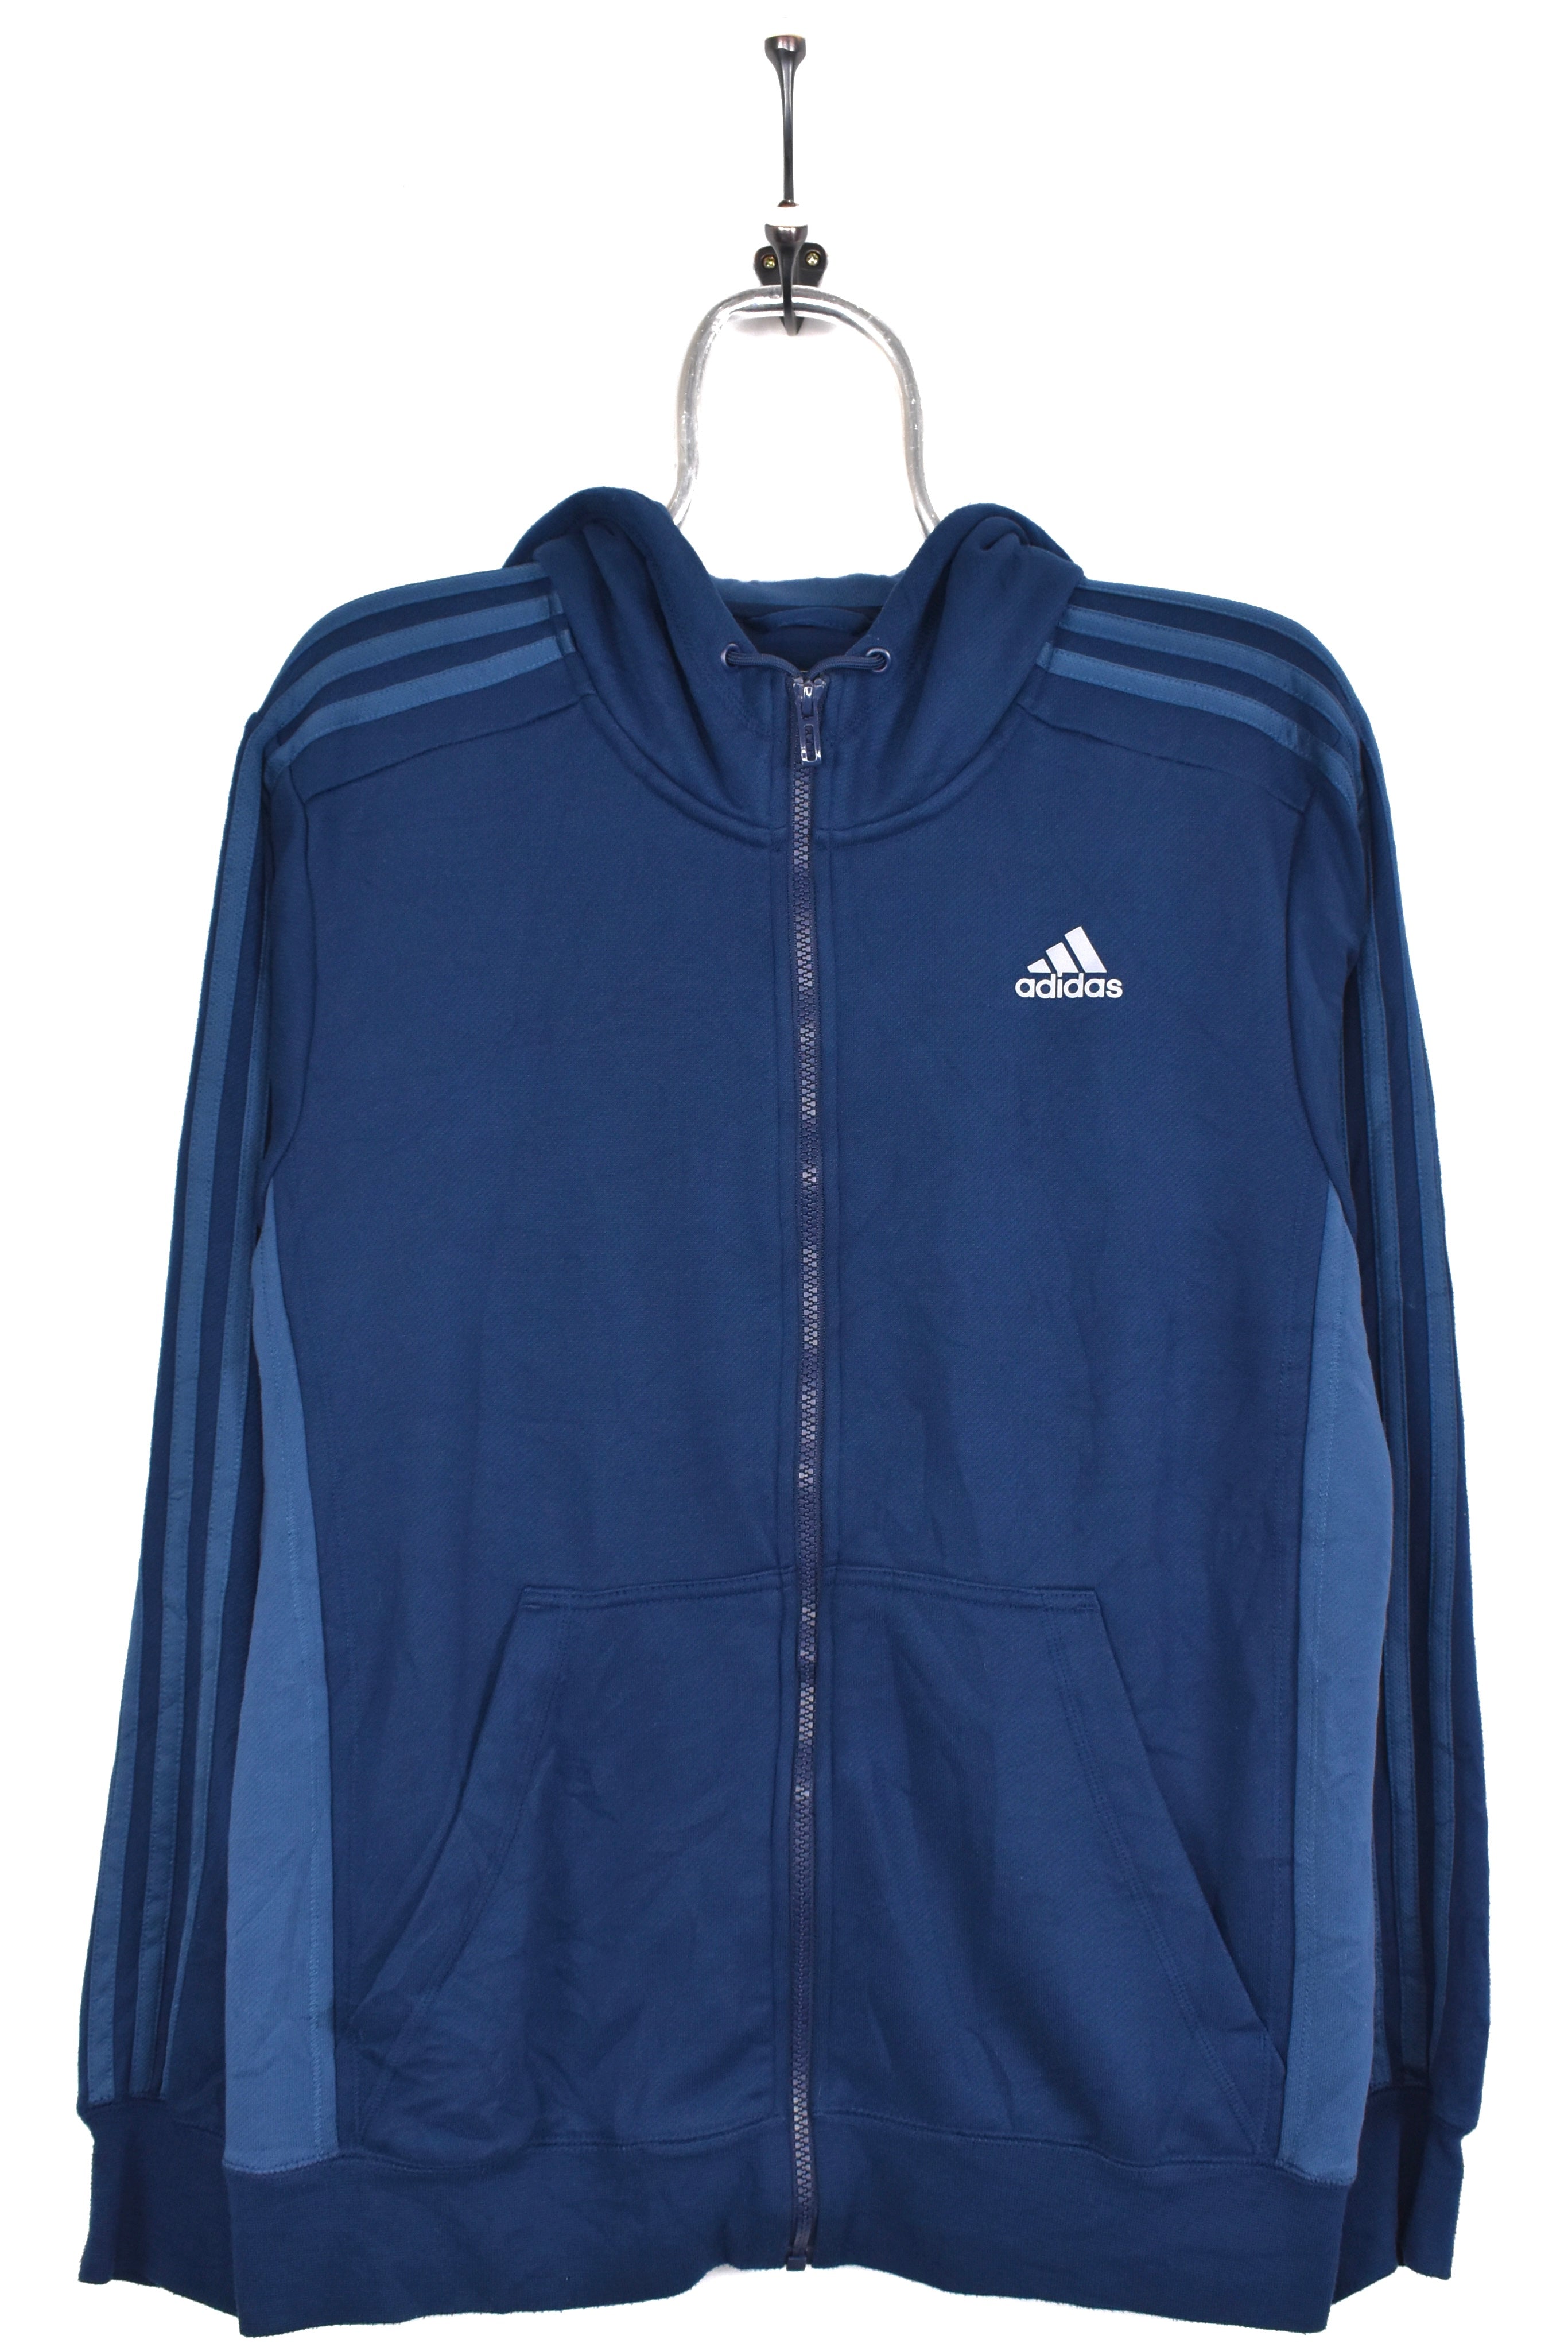 Modern Adidas hoodie, navy blue graphic sweatshirt - AU Medium ADIDAS